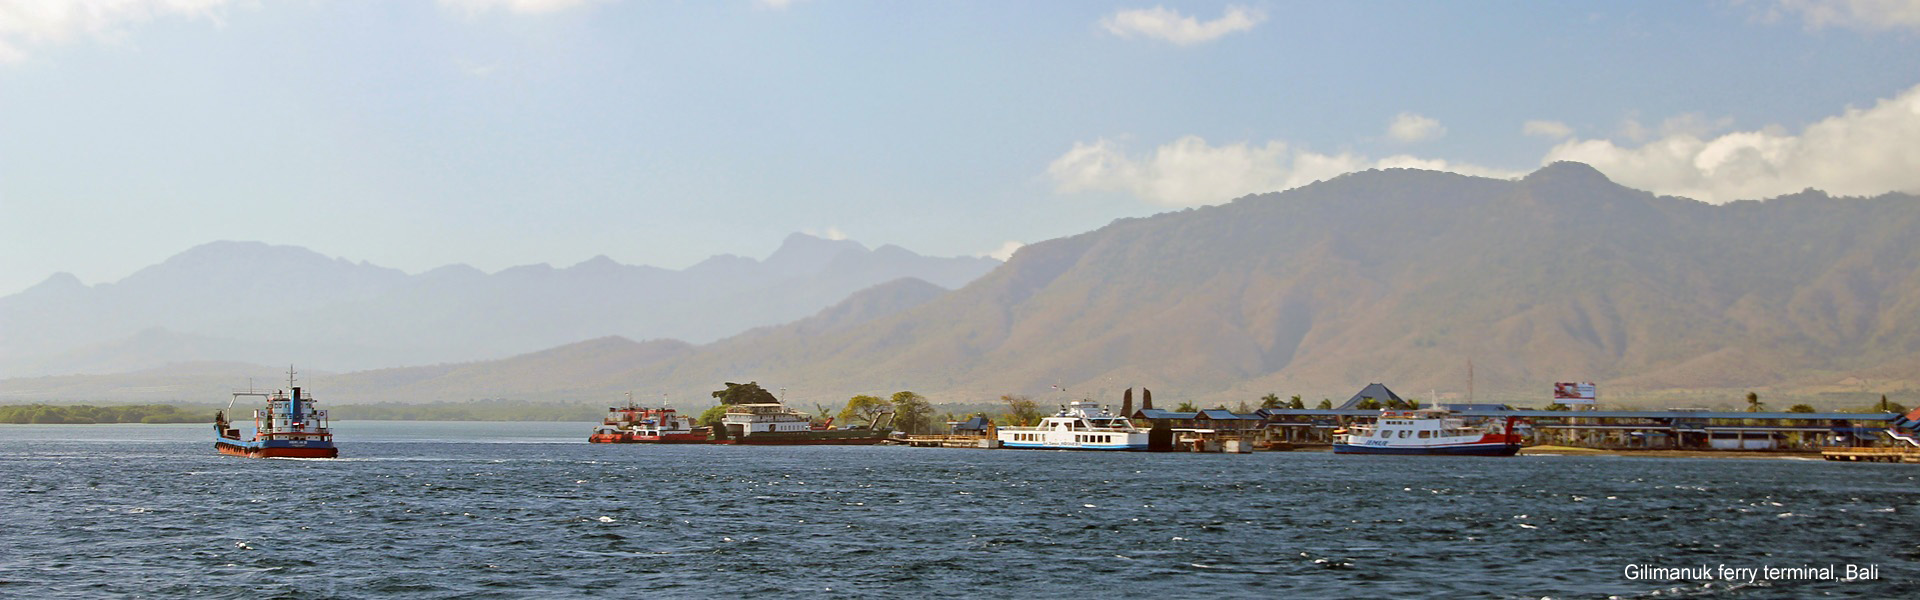 Gilimanuk ferry terminal, connecting with Banyuwangi, Java